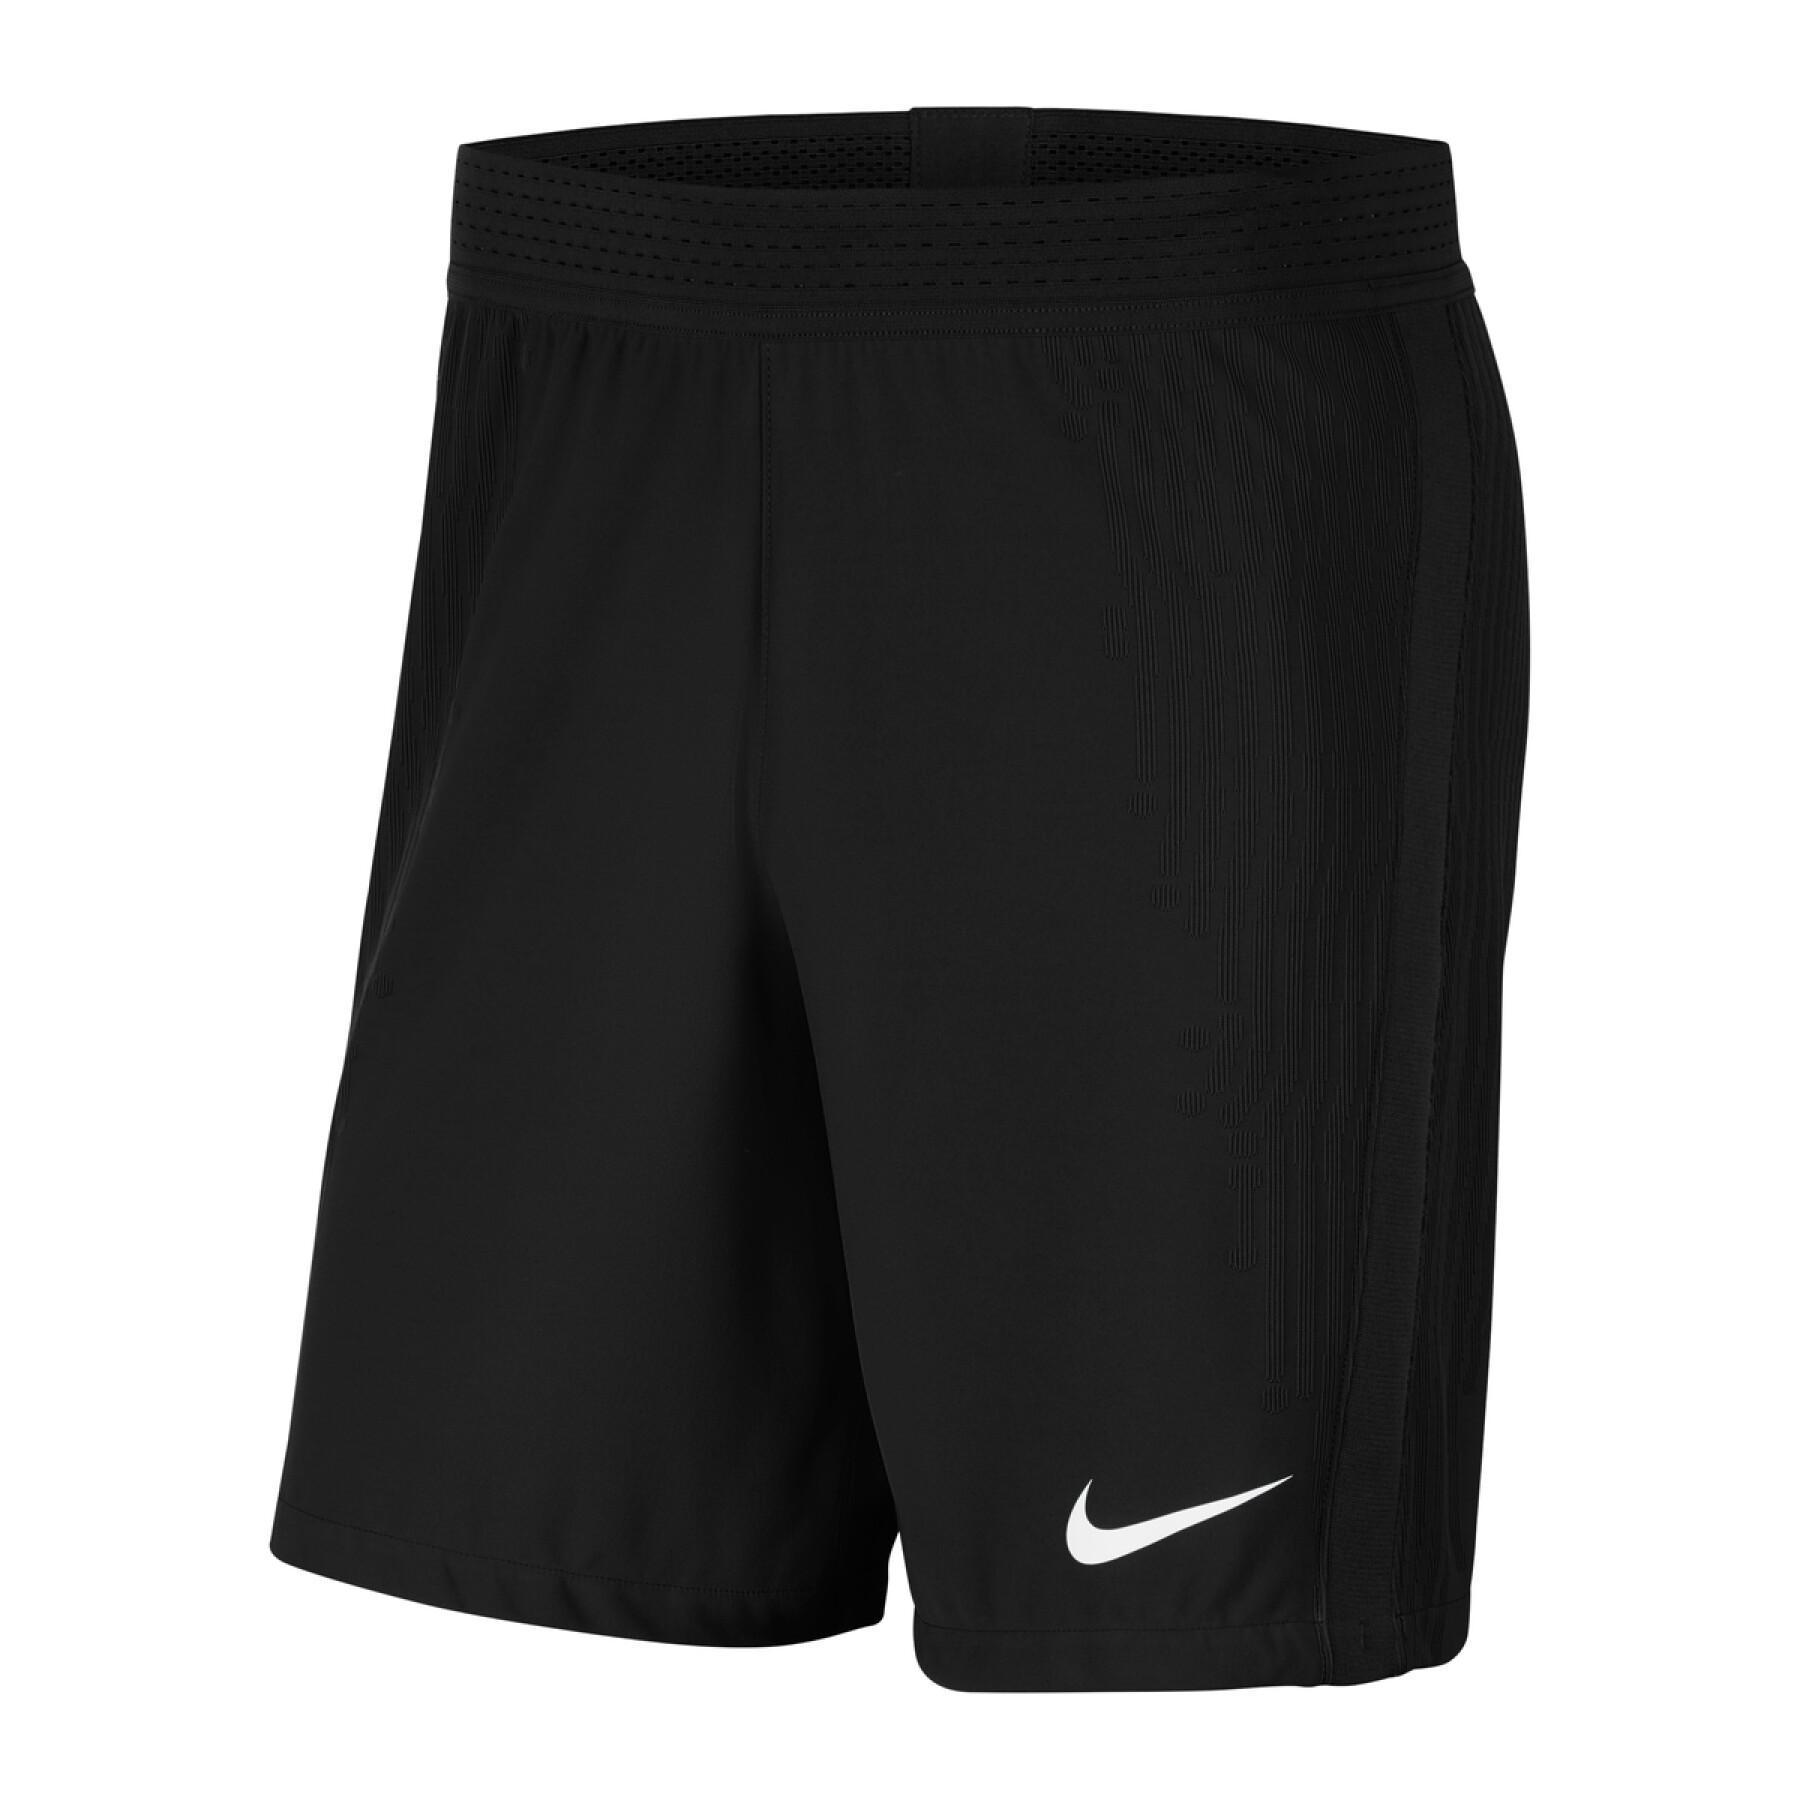 Short Nike Vapor Knit III